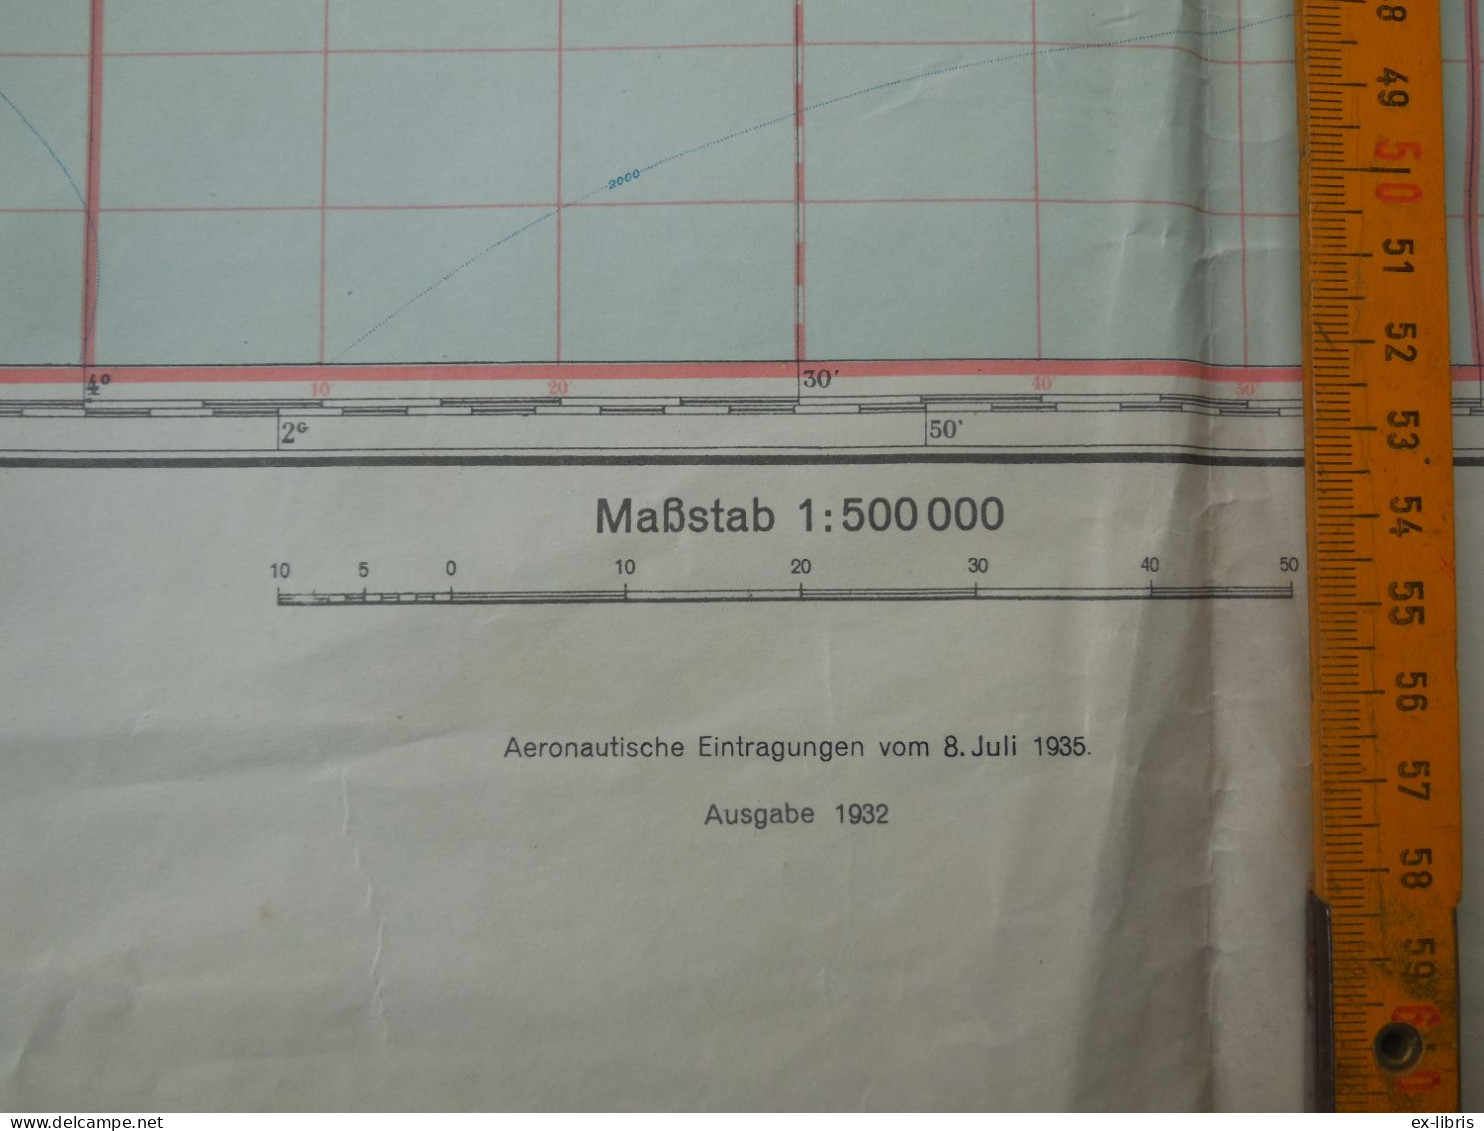 MARSEILLE - Fliegerausgabe (Carte D'aviateur) 1936 - Sonderausgabe - Documents